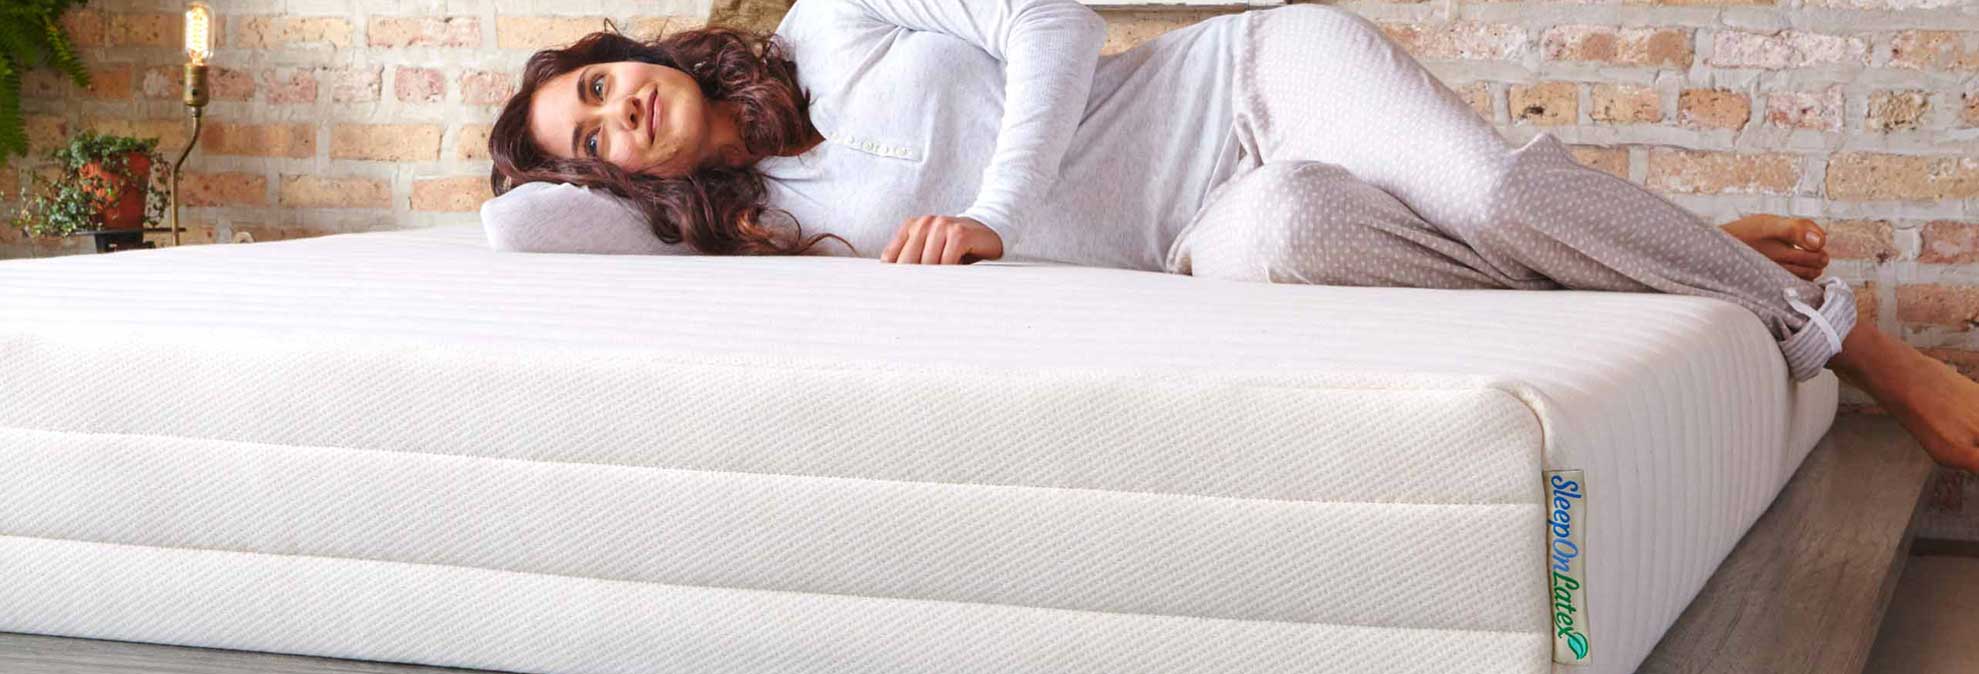 consumer reports best portable air mattress